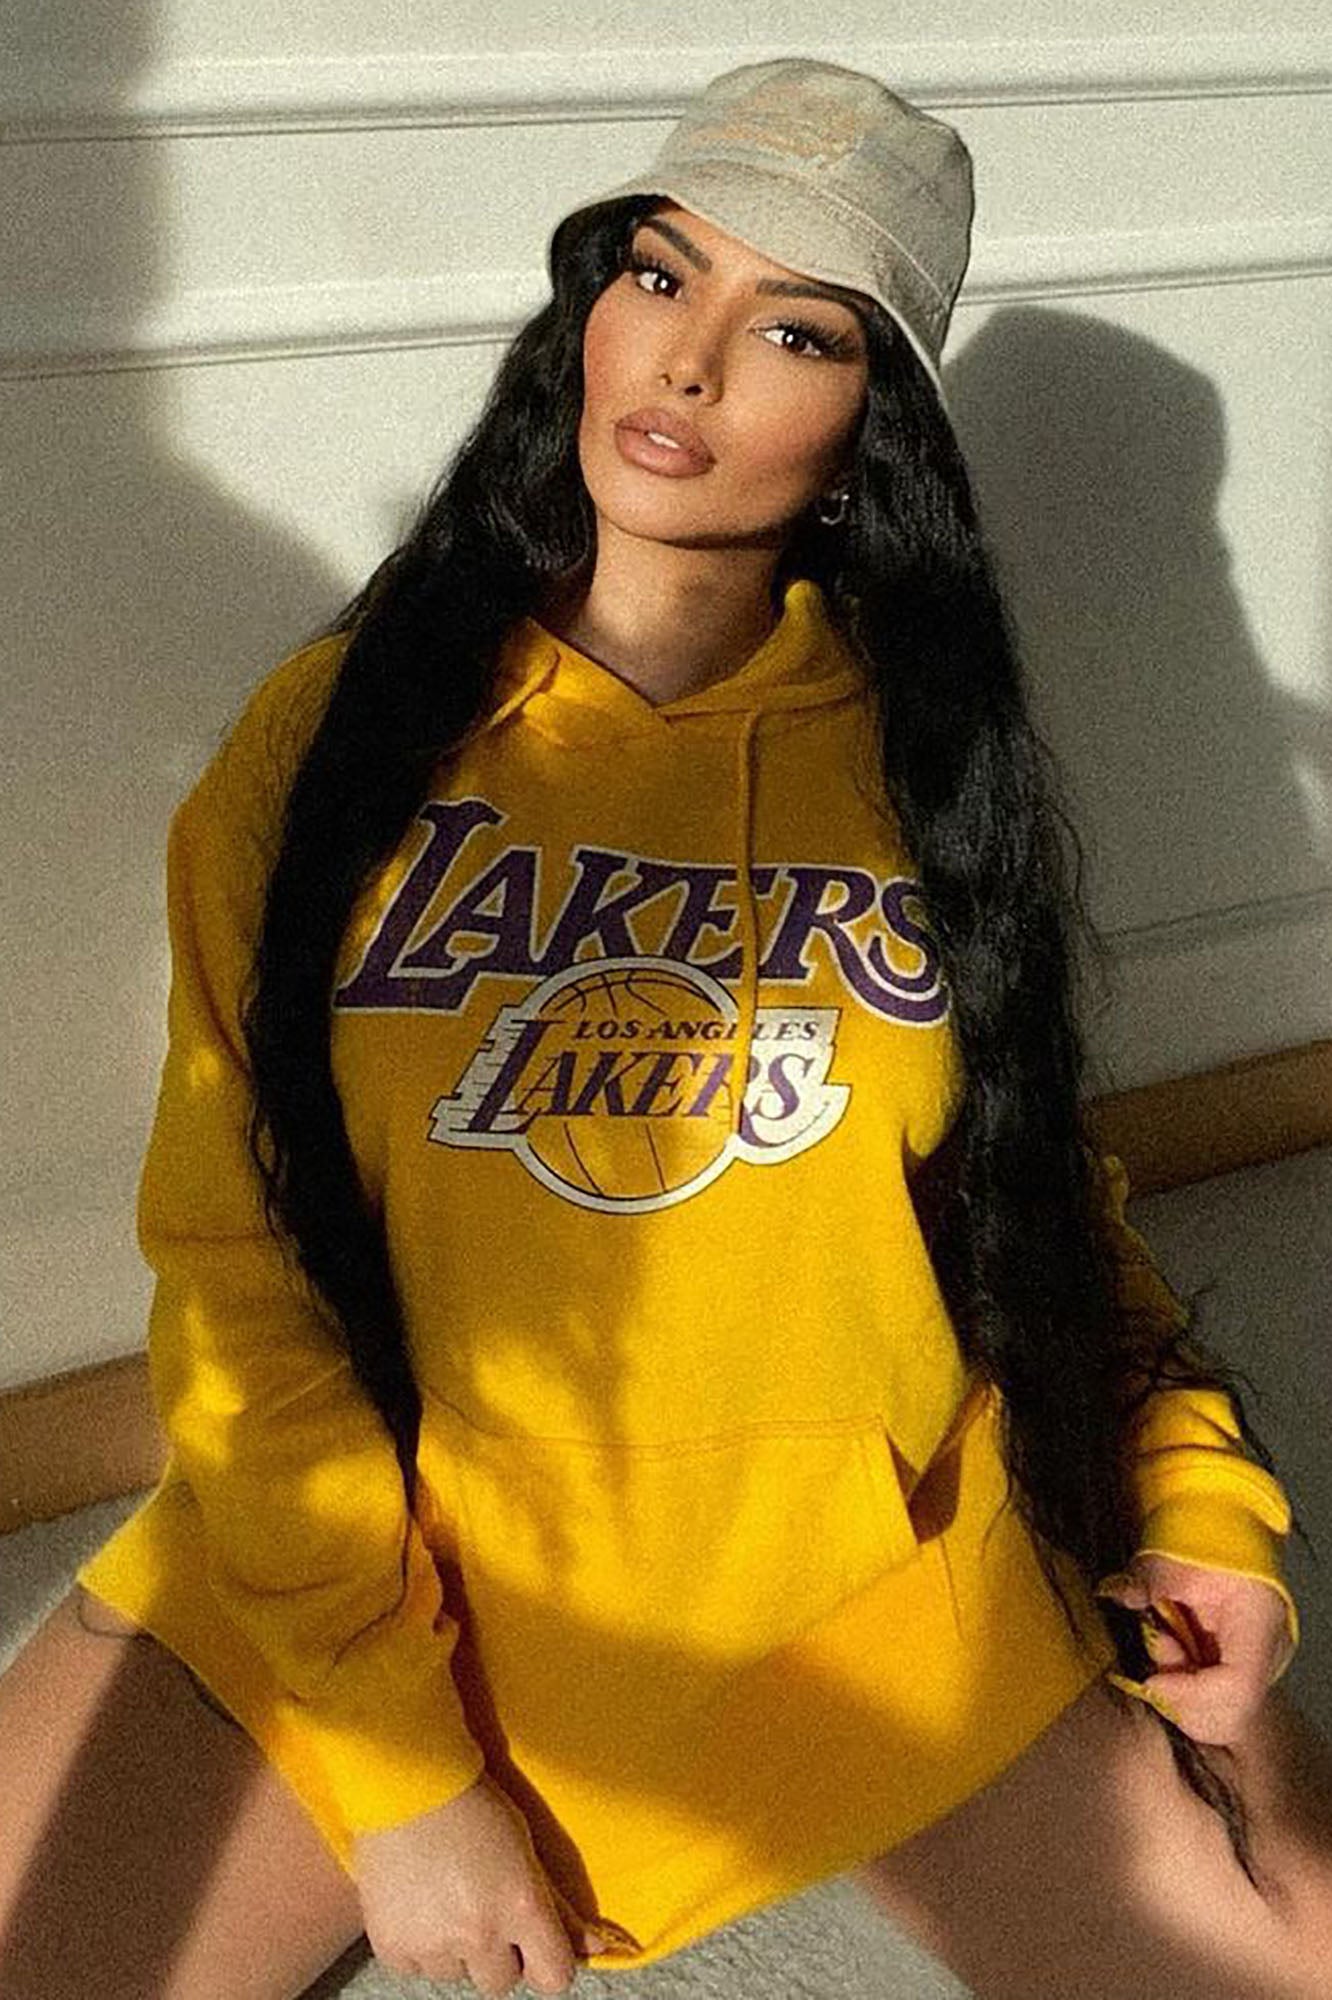 Chill Out Los Angeles Lakers Hoodie - Purple, Fashion Nova, Mens Graphic  Tees